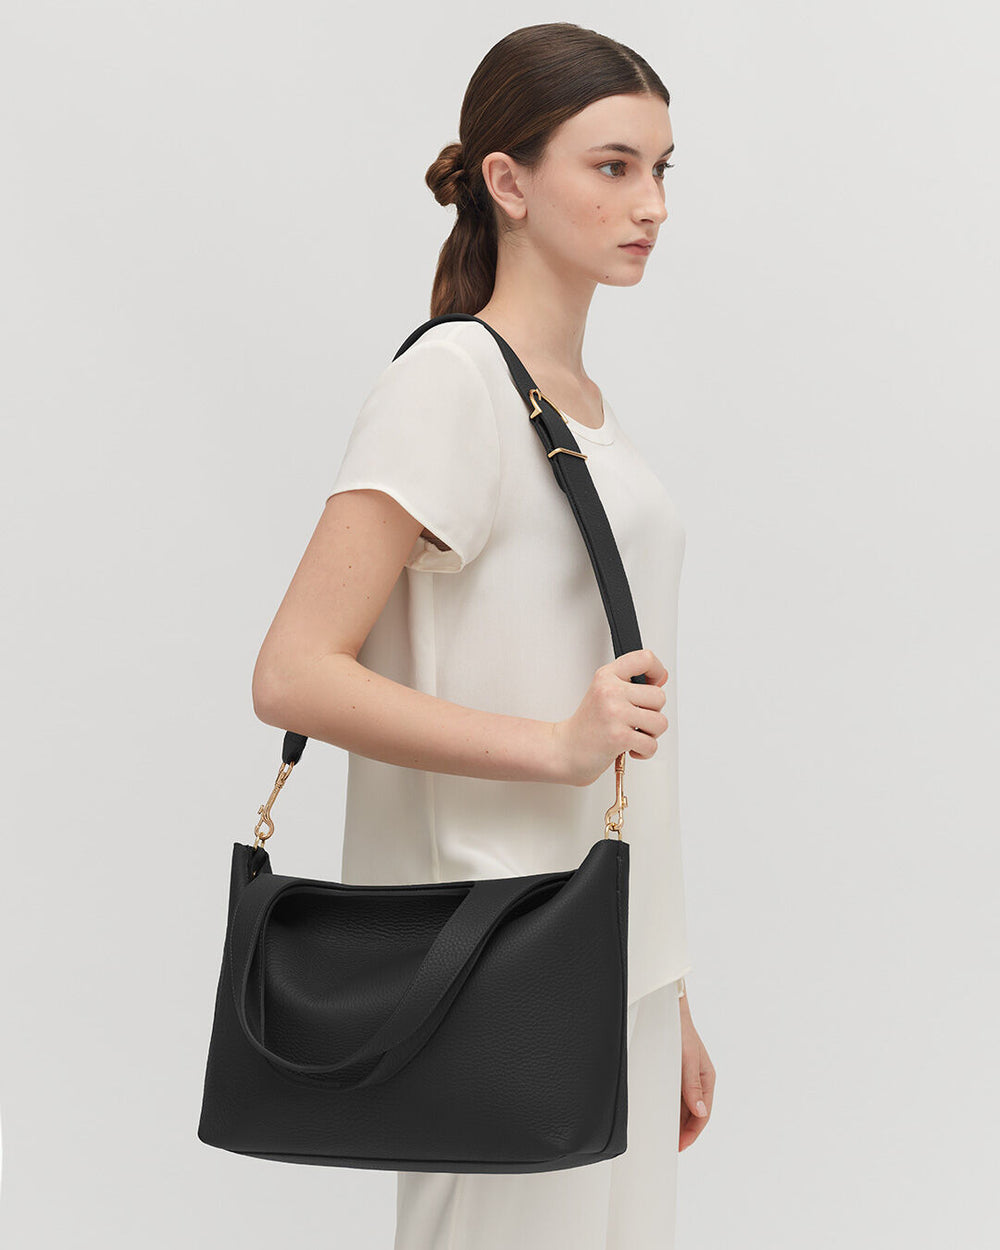 Webbing Adjustable Crossbody Bag Strap with 100% Genuine Leather